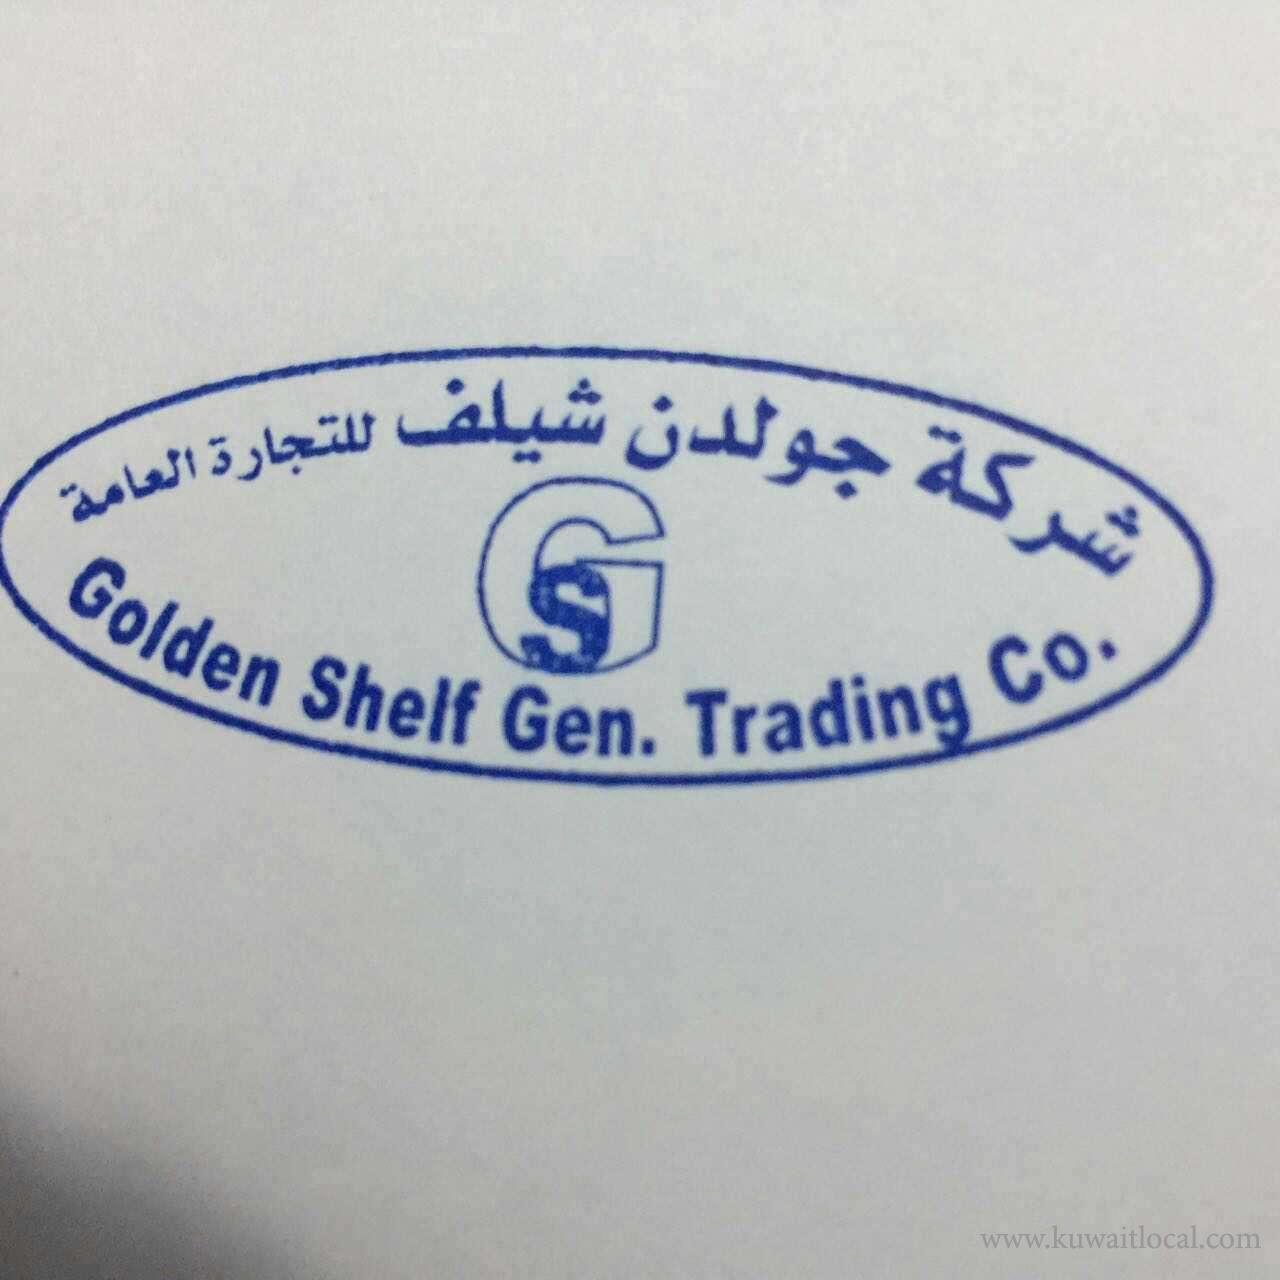 golden-shelf-general-trading-company_kuwait